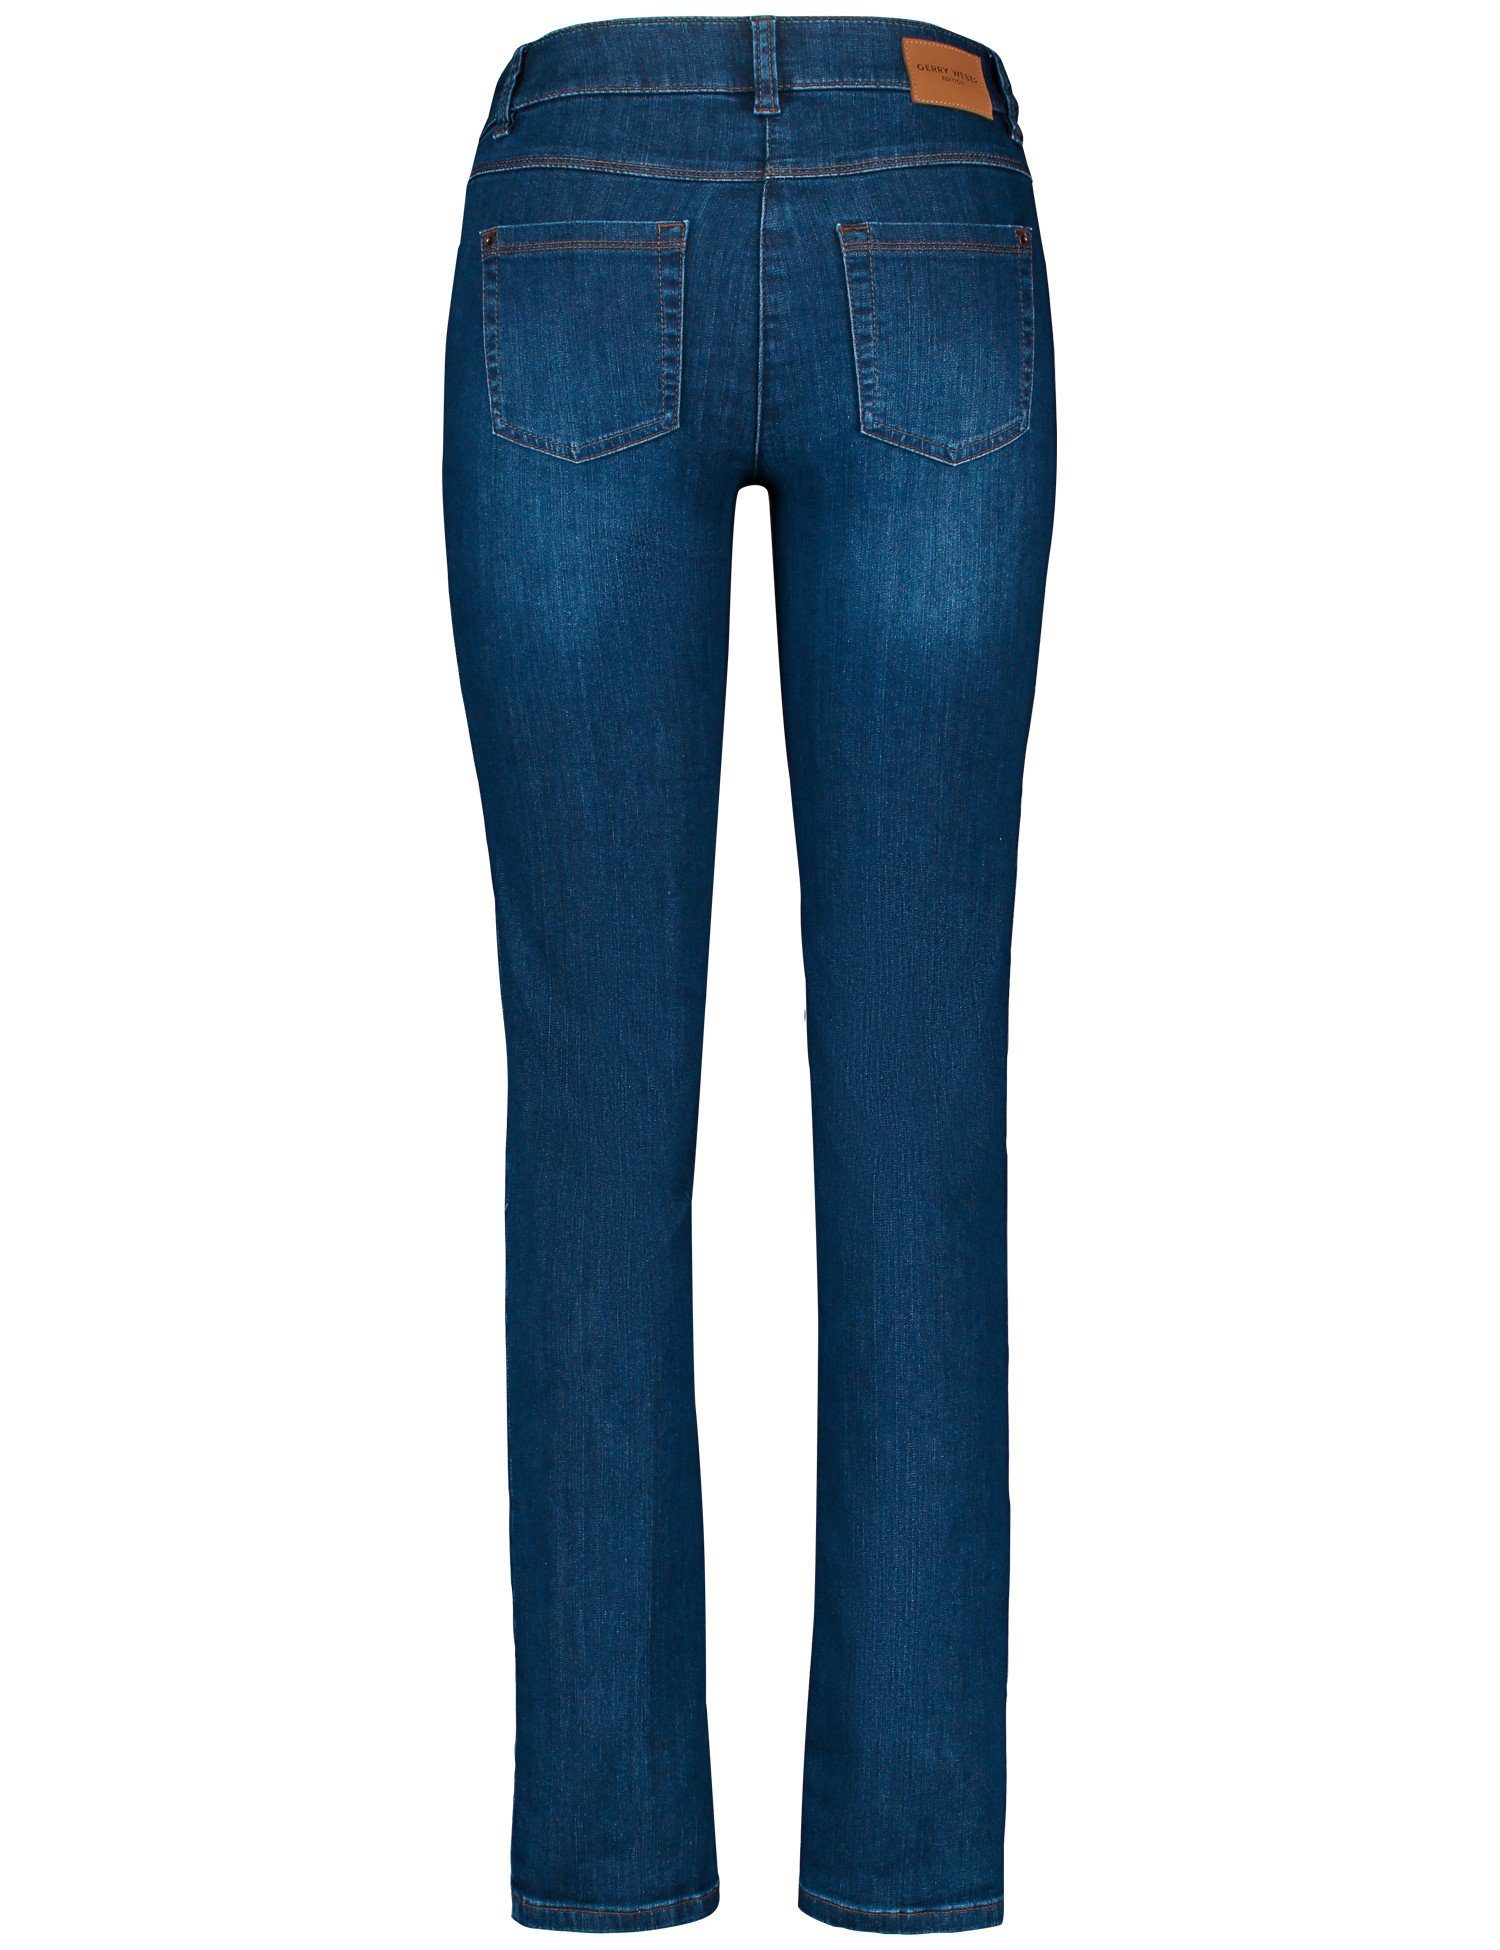 Slimfit dark blue denim Best4me Jeans WEBER Stretch-Jeans mit use GERRY 5-Pocket